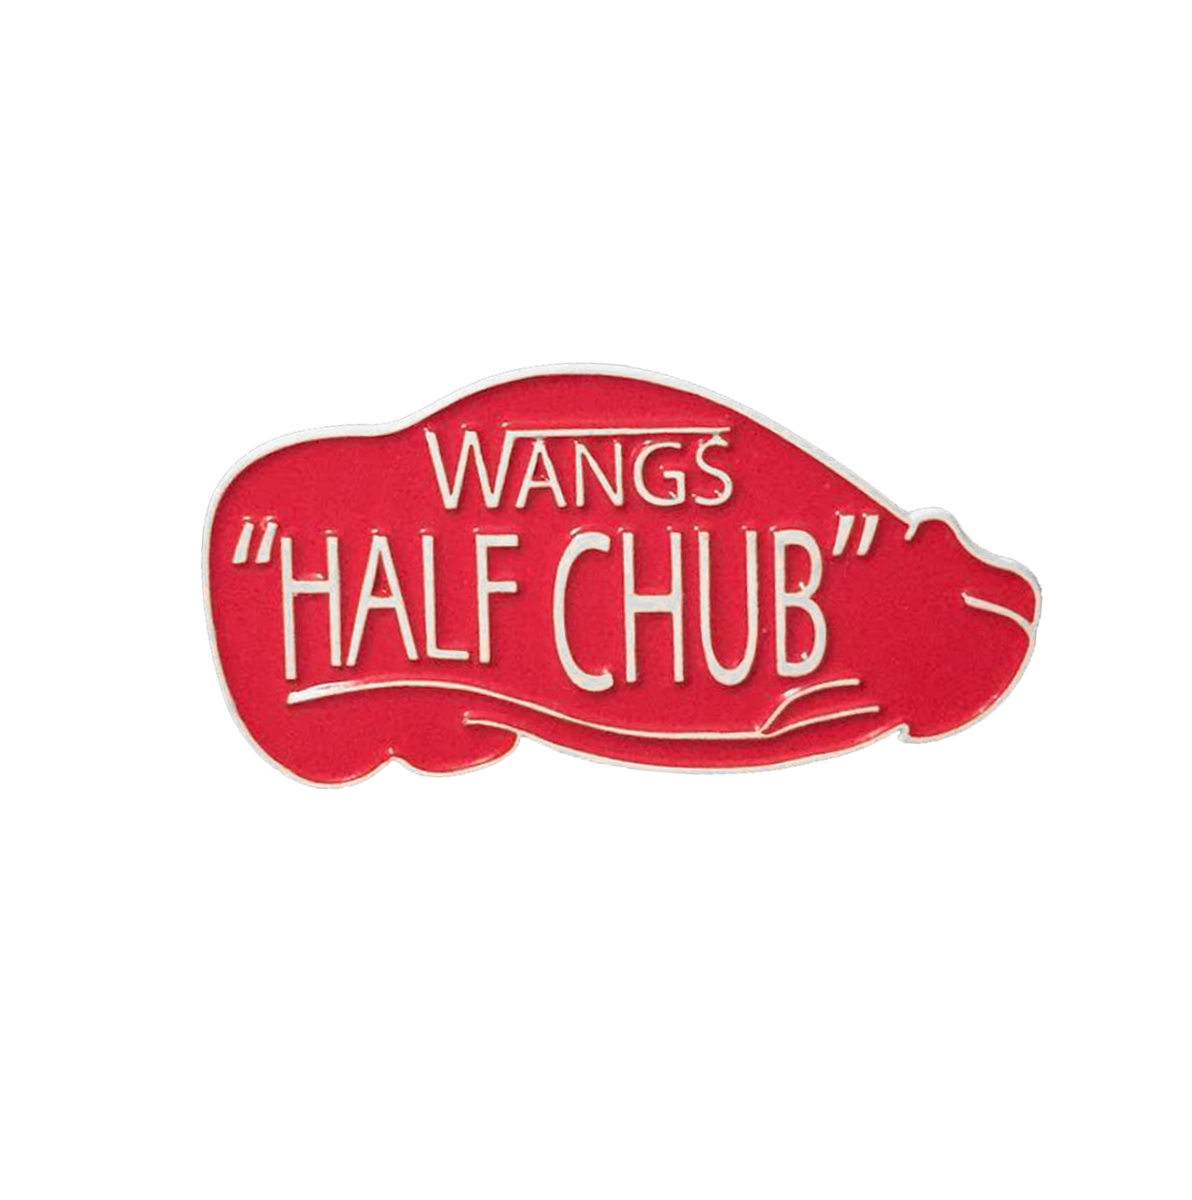 What Is A Half Chub